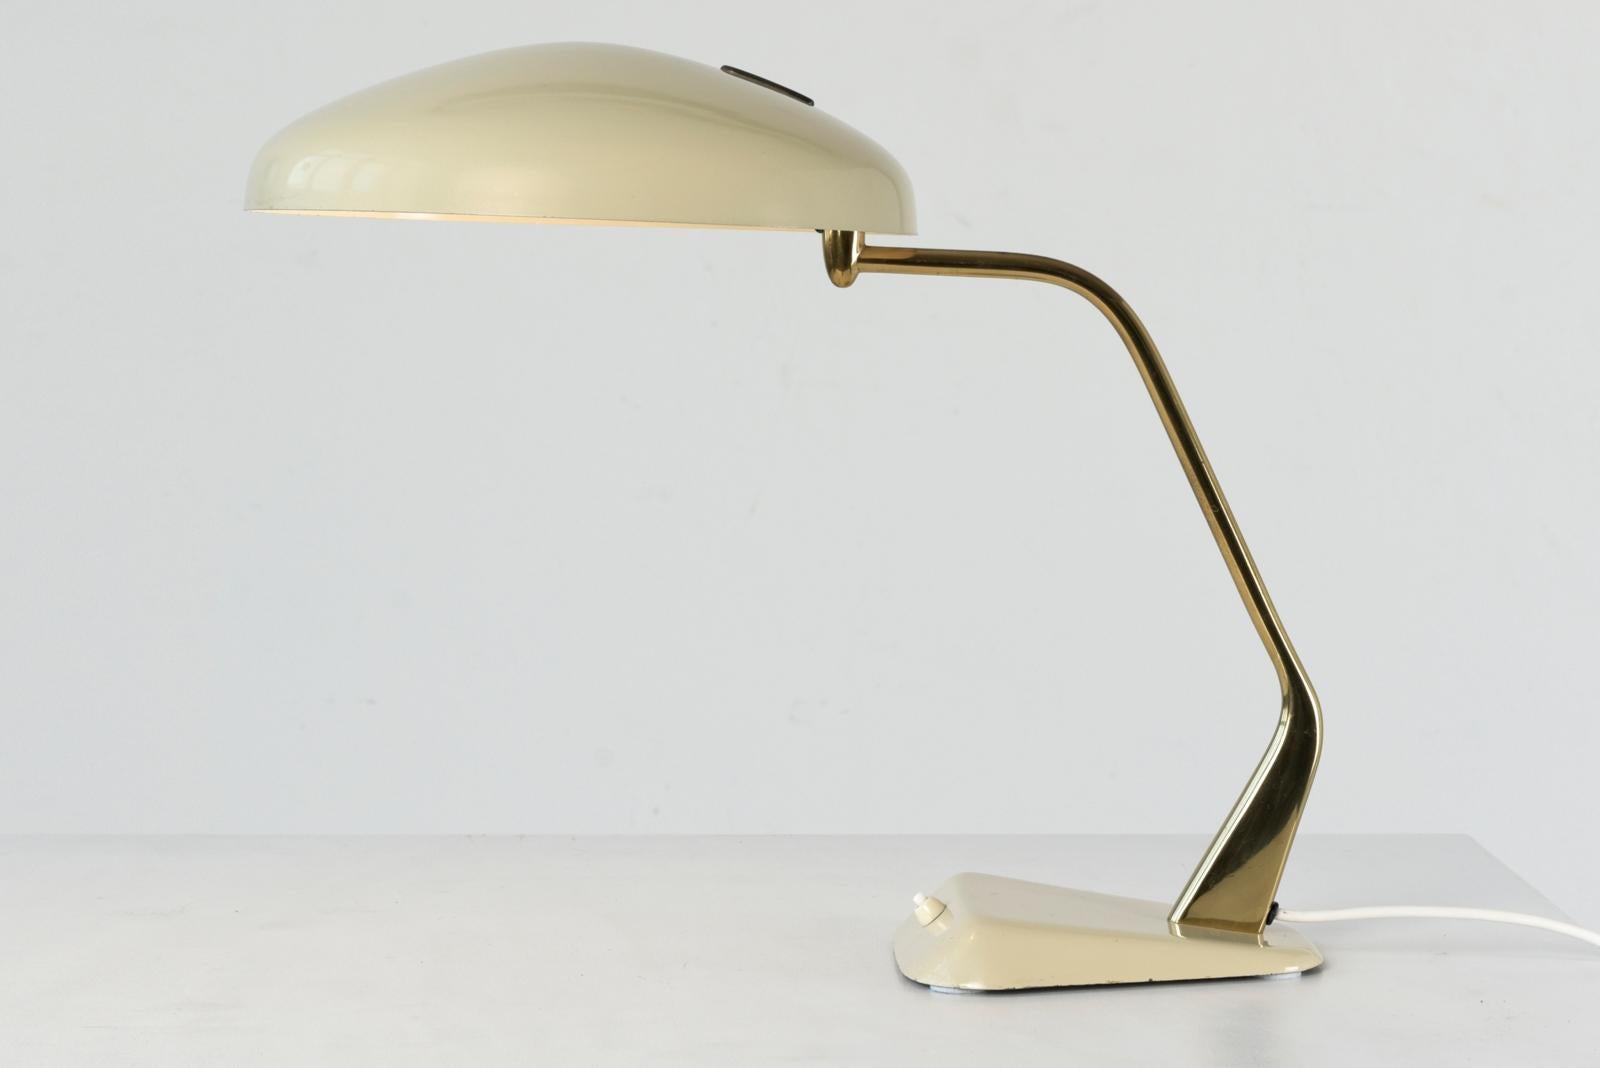 Mid-Century Modern Lampe en métal par Belmag, Suisse - années 1950  en vente